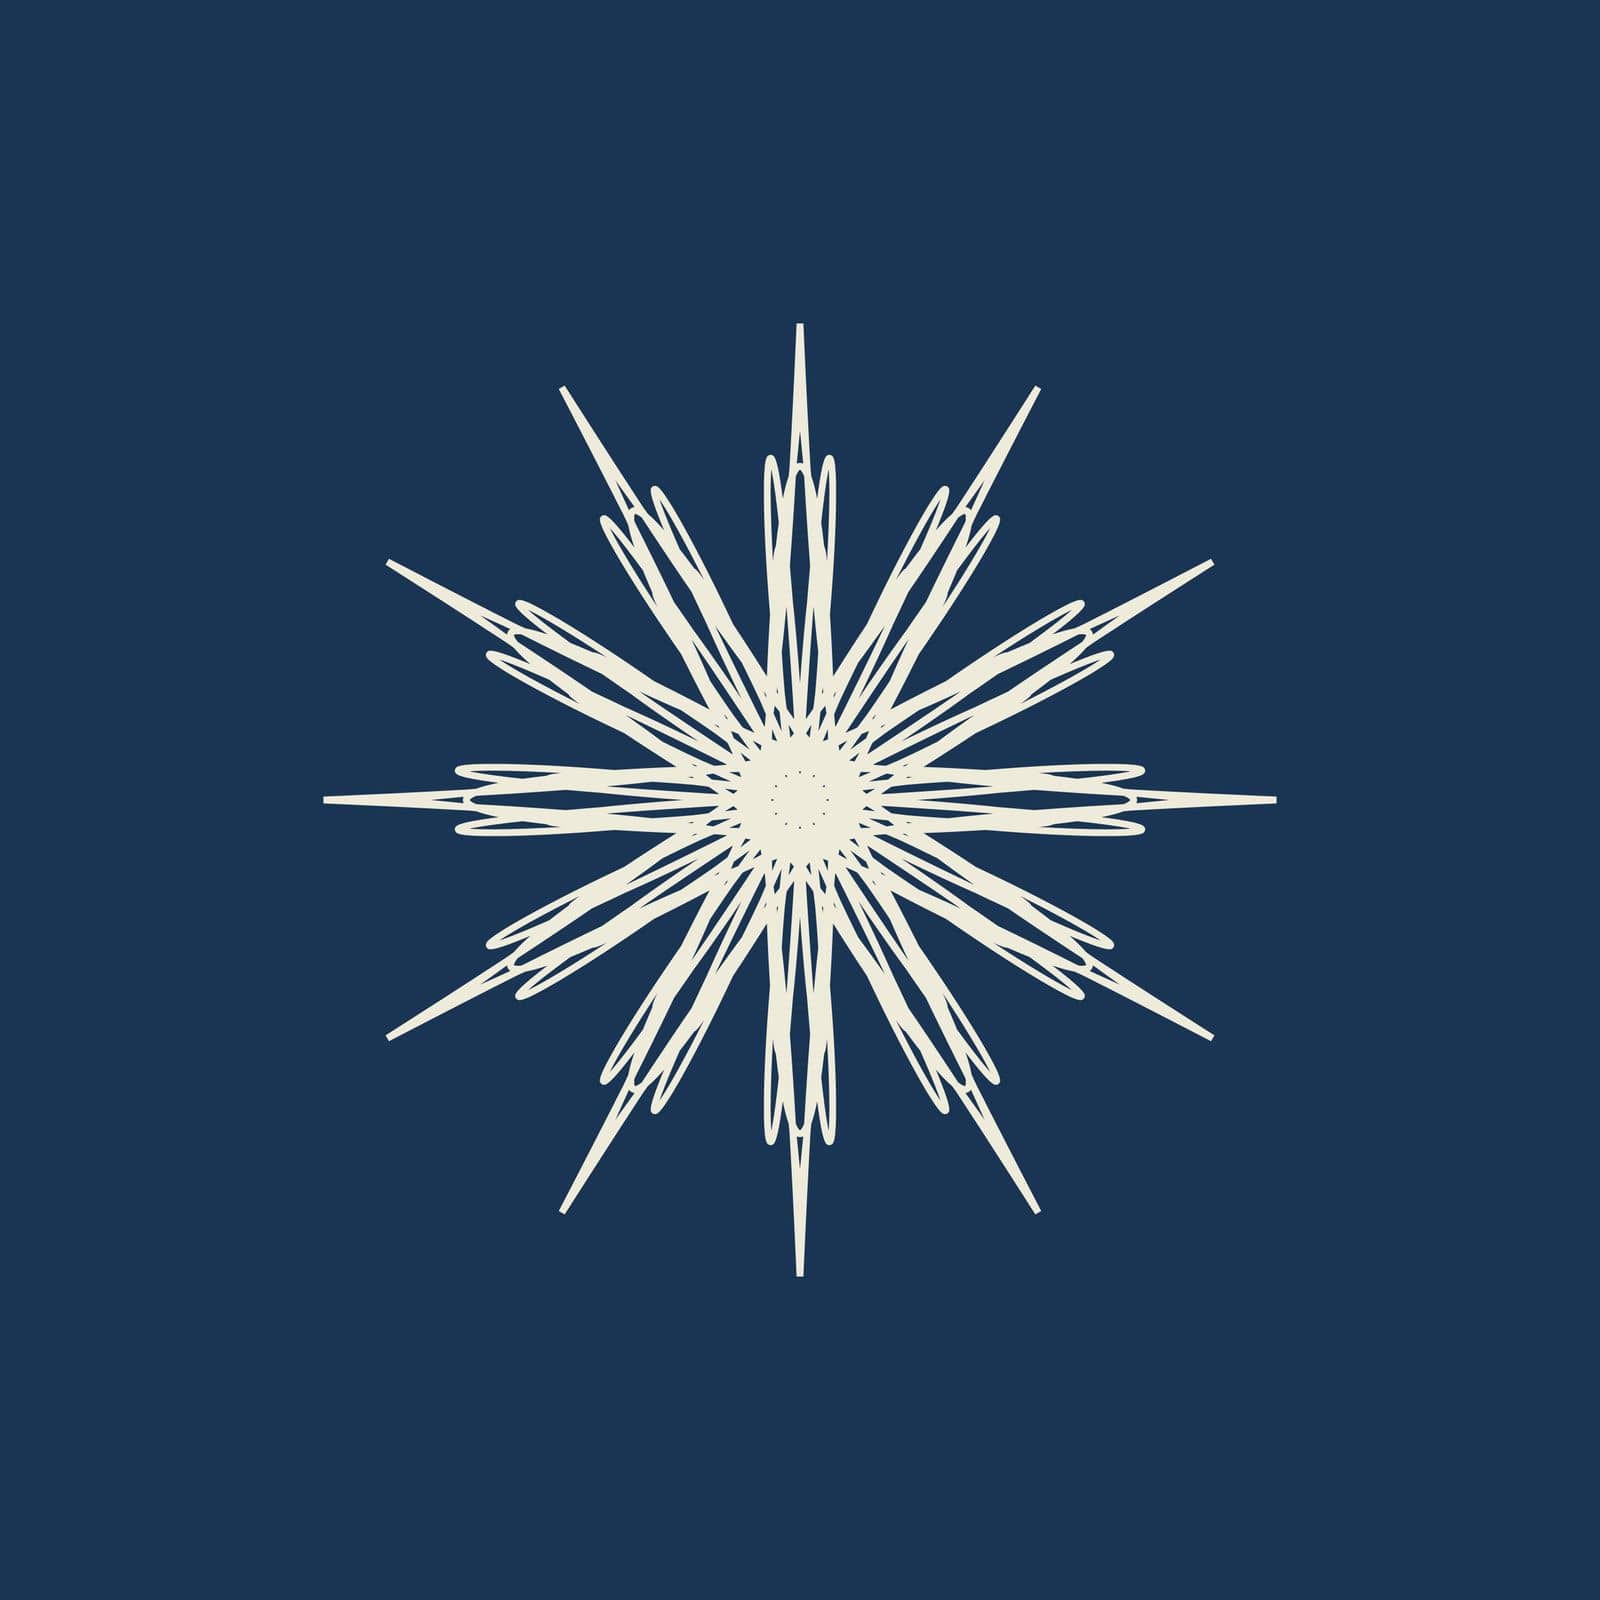 snowflake dark blue background sharp star crystal by Veranikas